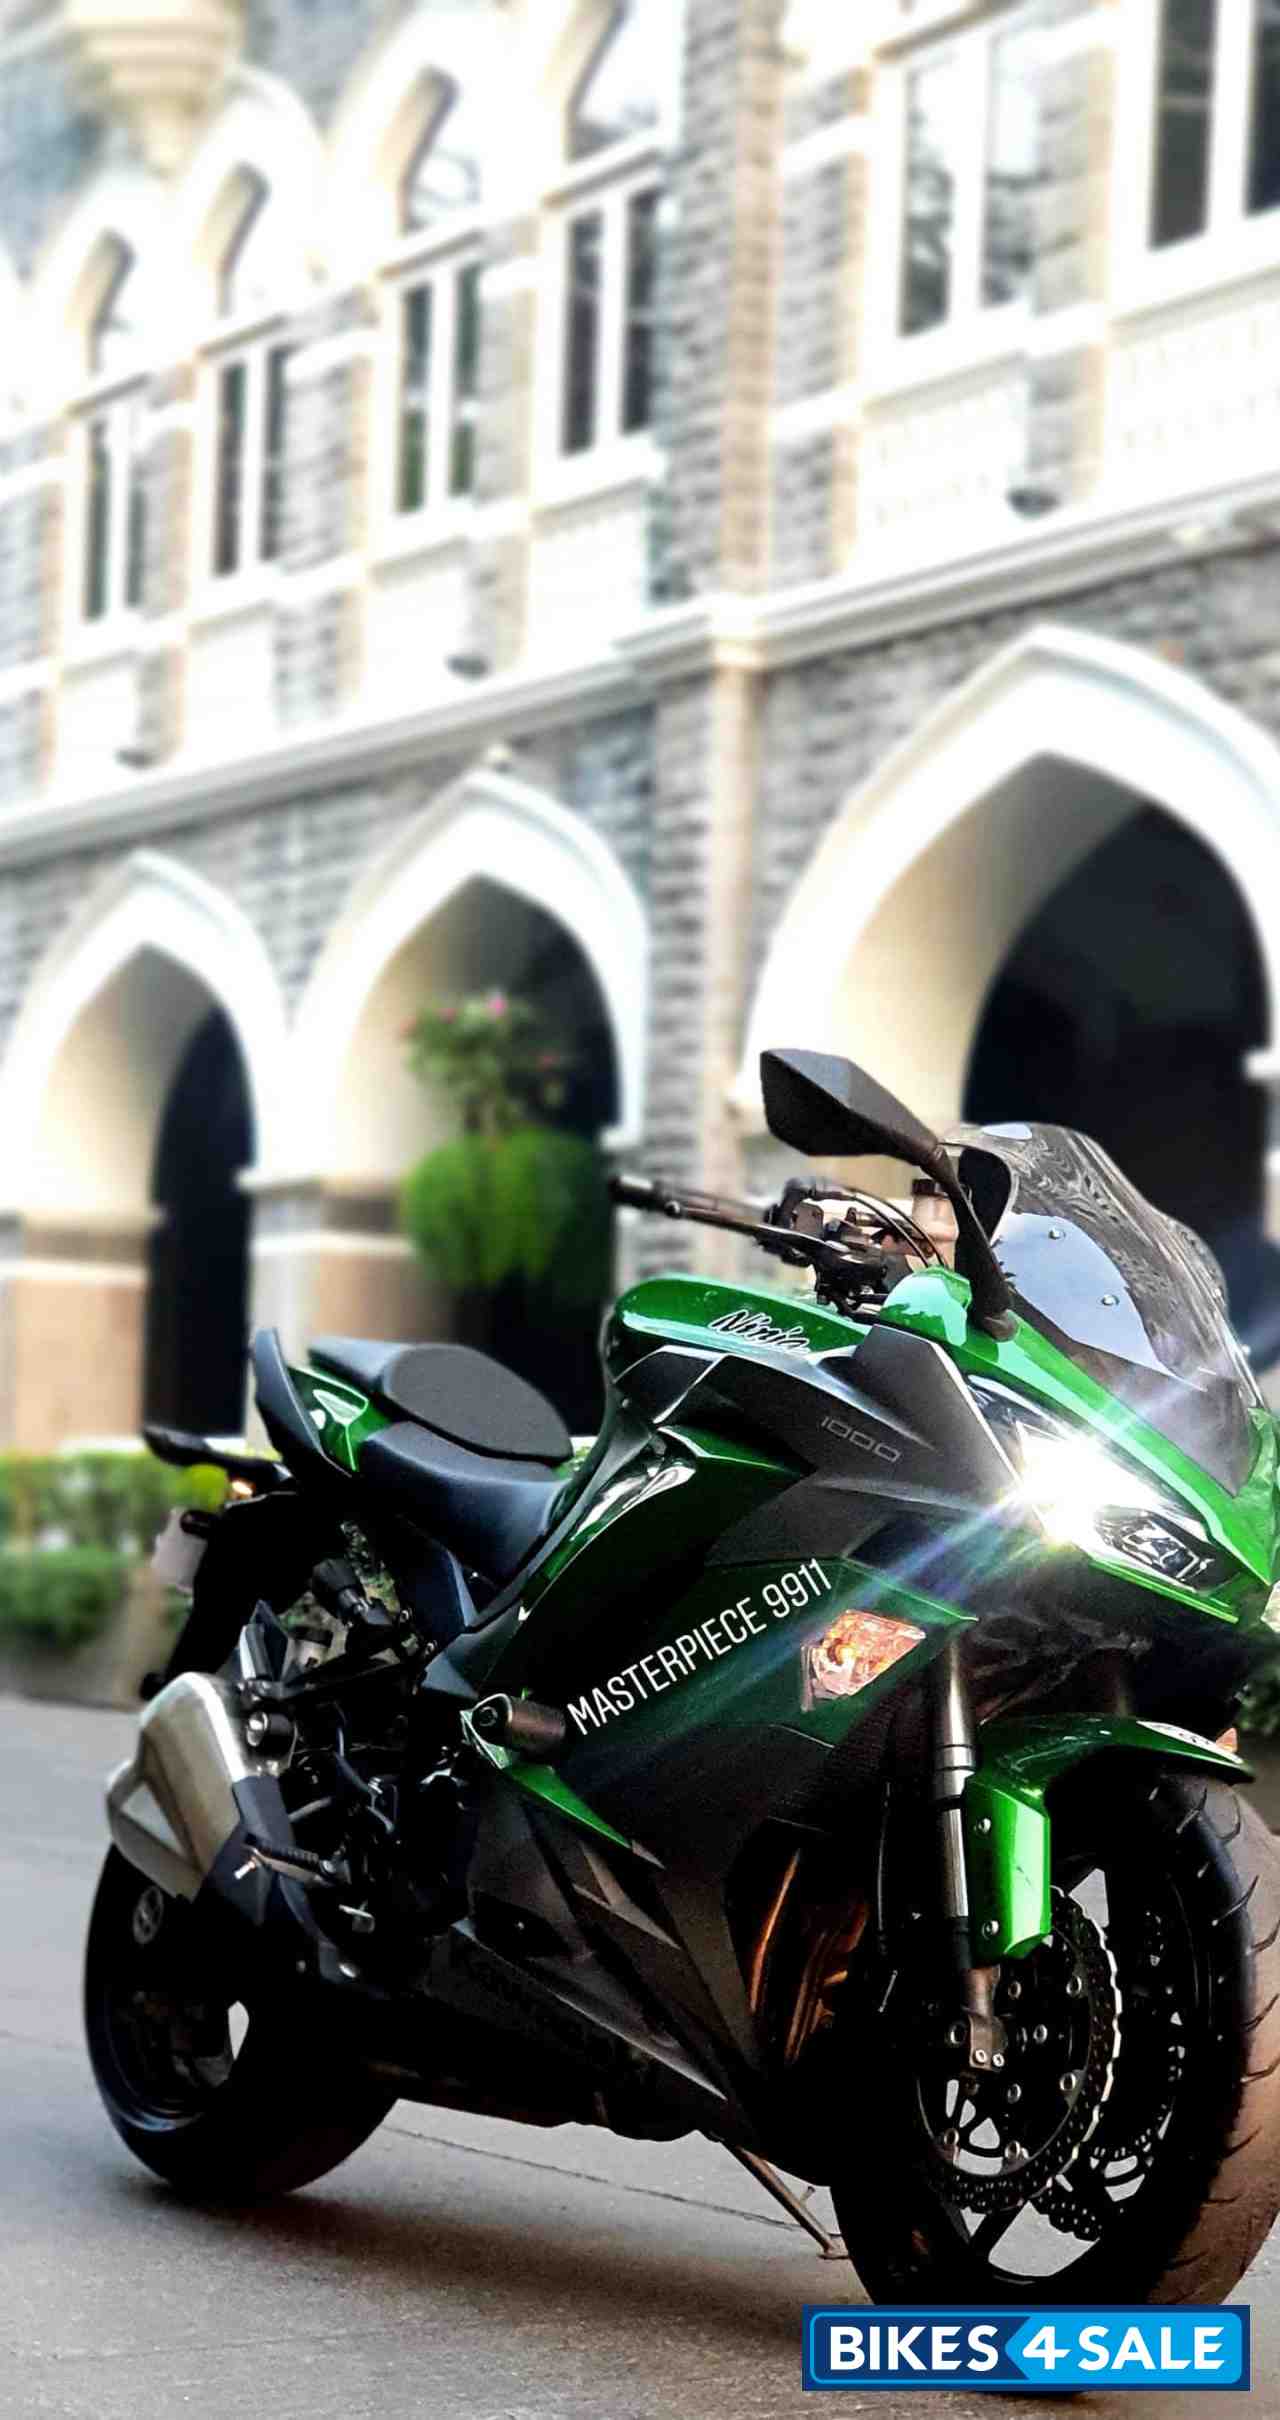 Emerald Blazed Green Kawasaki Ninja 1000